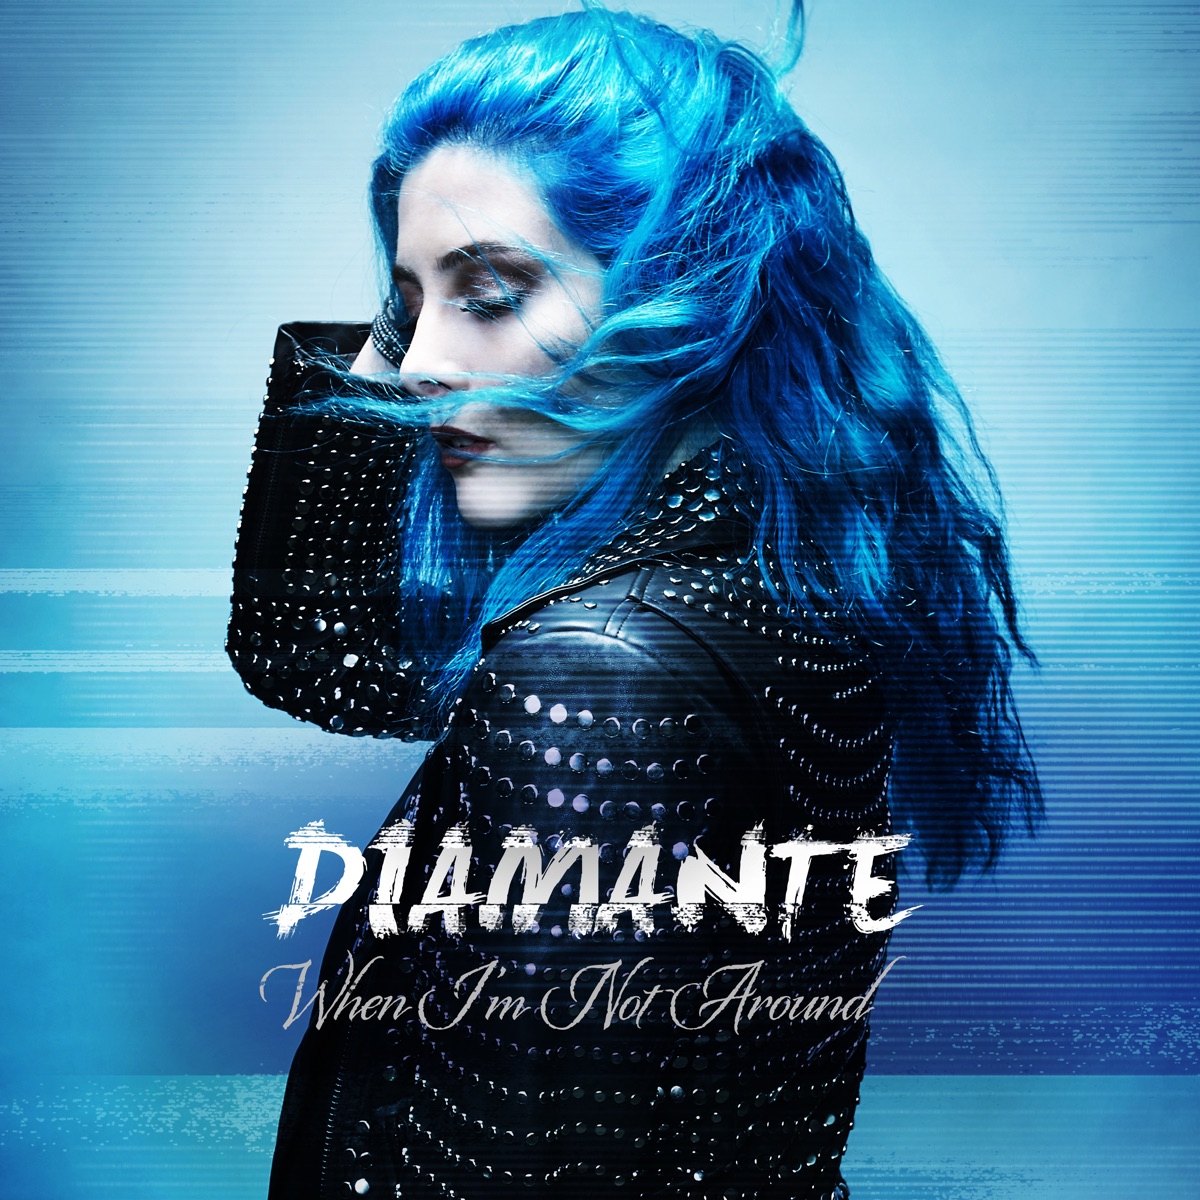 The Diamond Covers - EP - Album by DIAMANTE - Apple Music